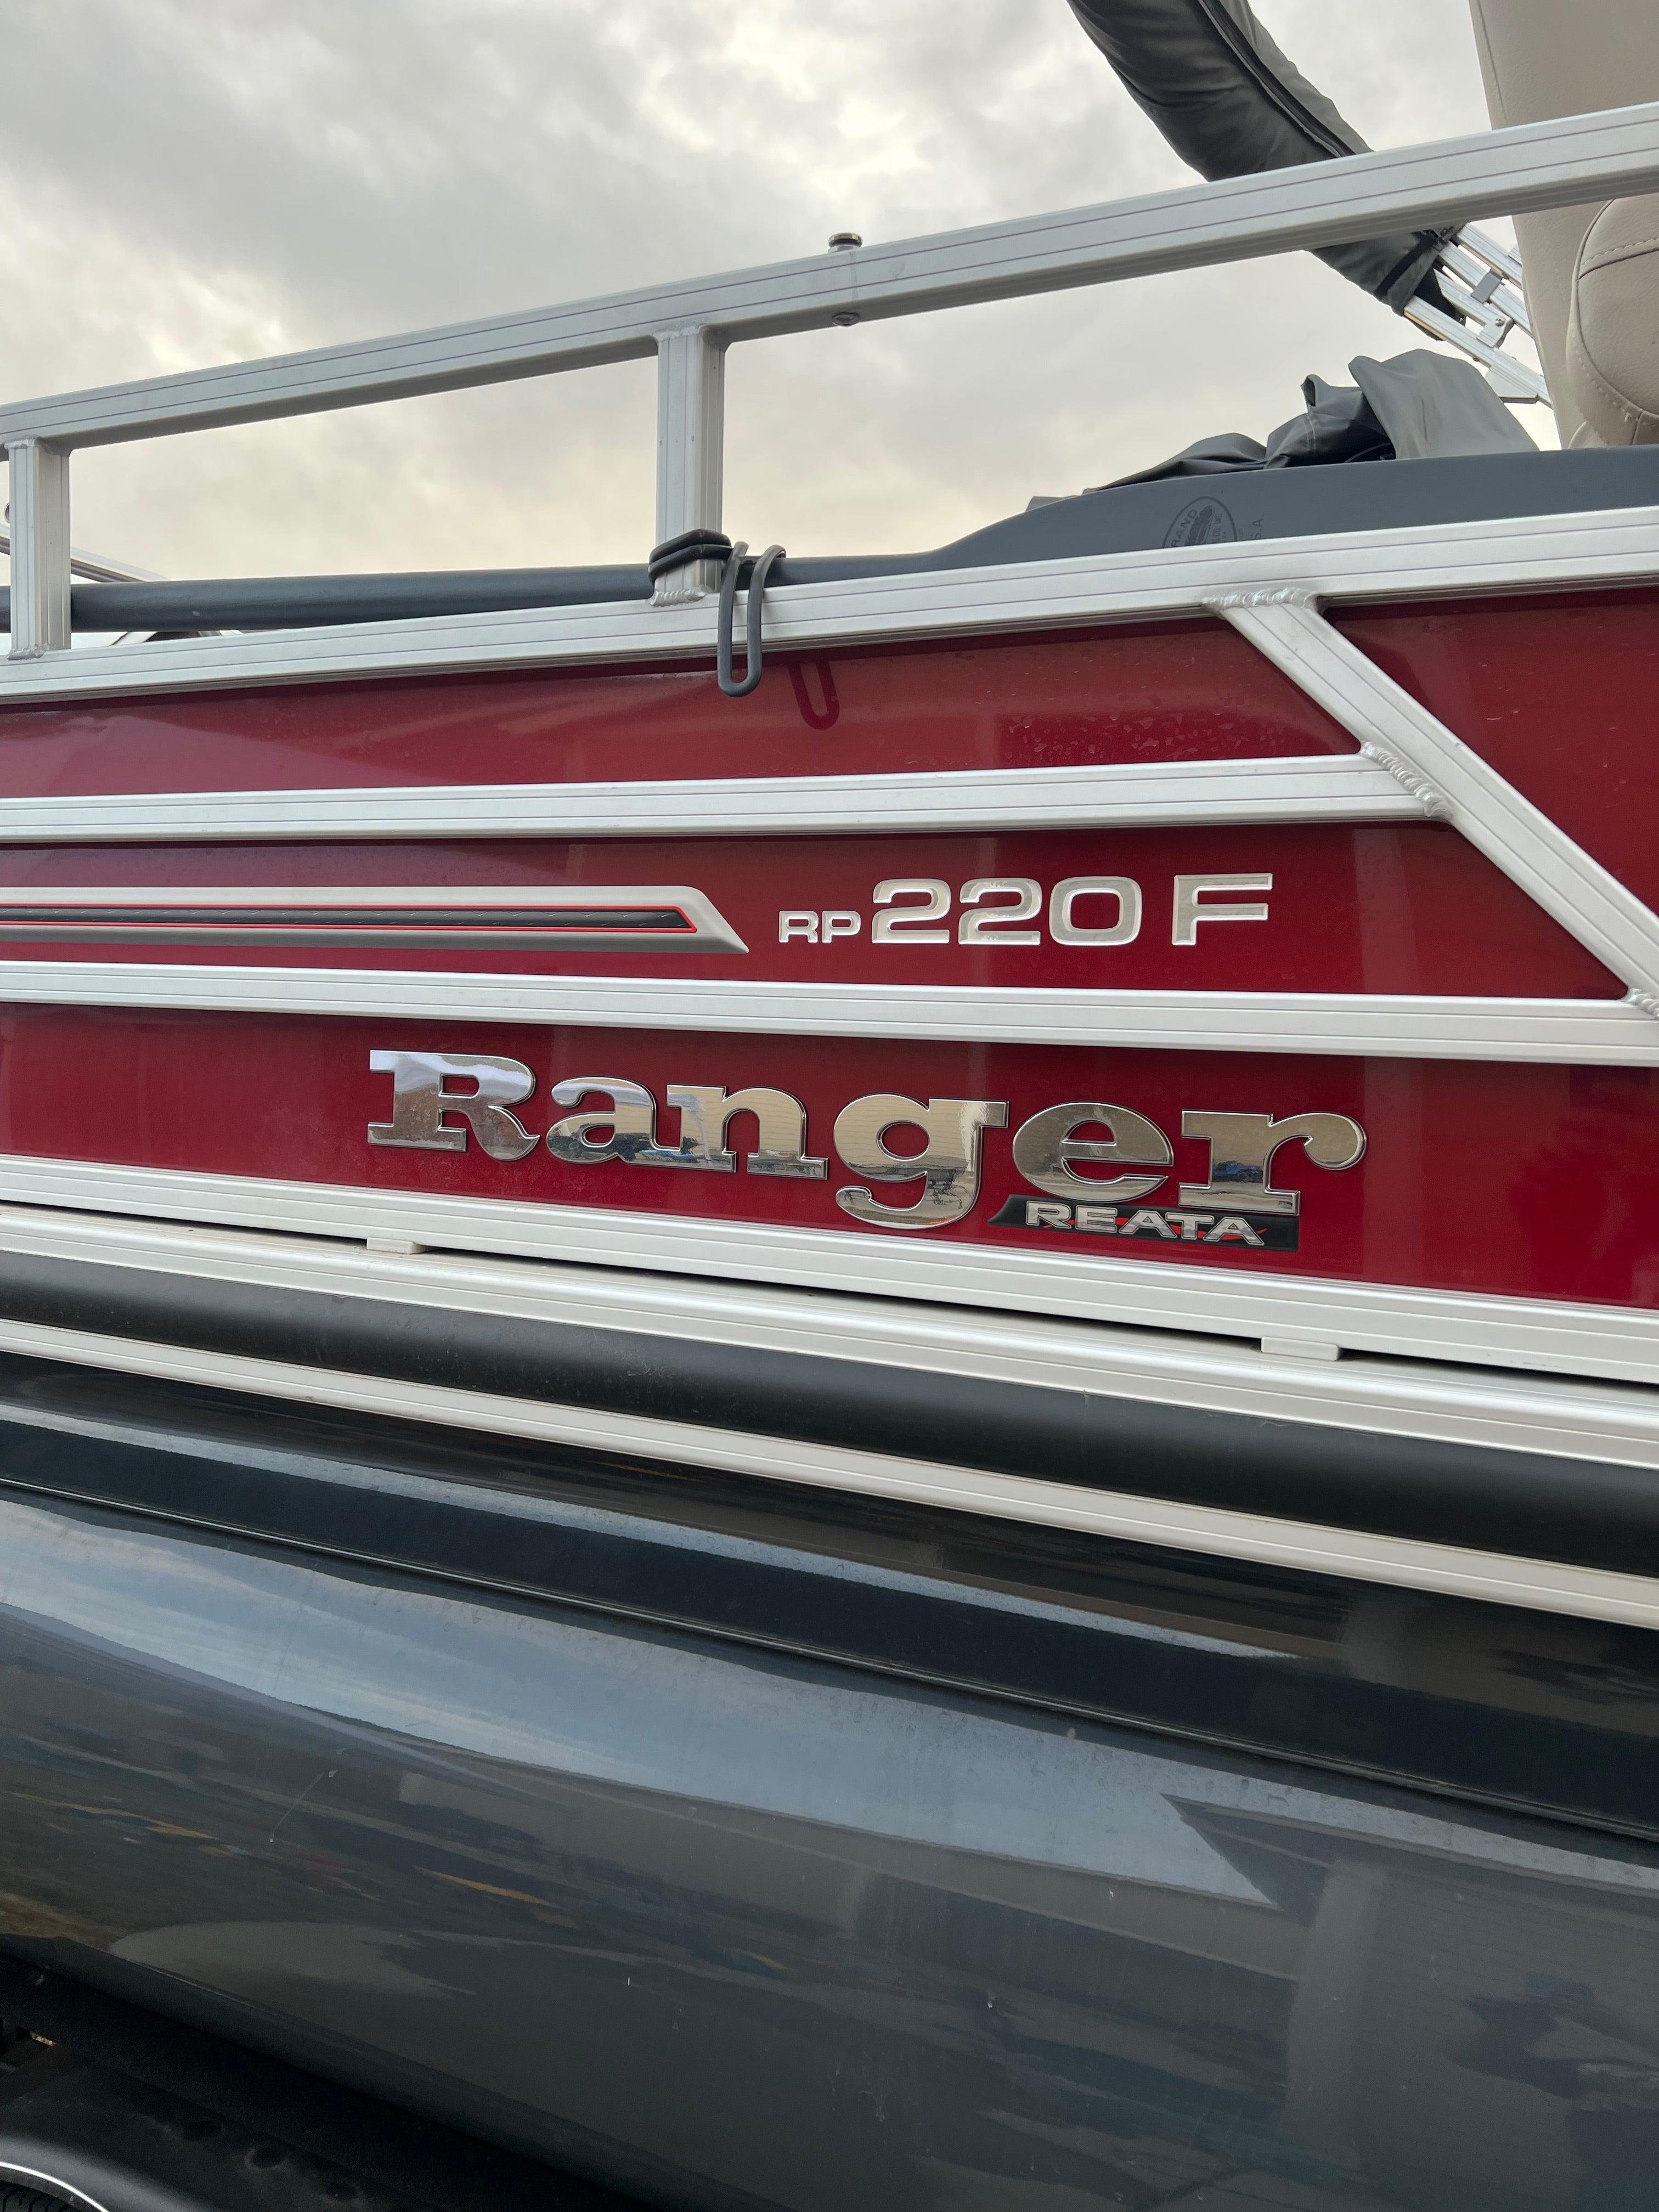 New Price! 2020 Ranger Reata 220F Mercury ProXS 115 HP Motor - Trailer included!